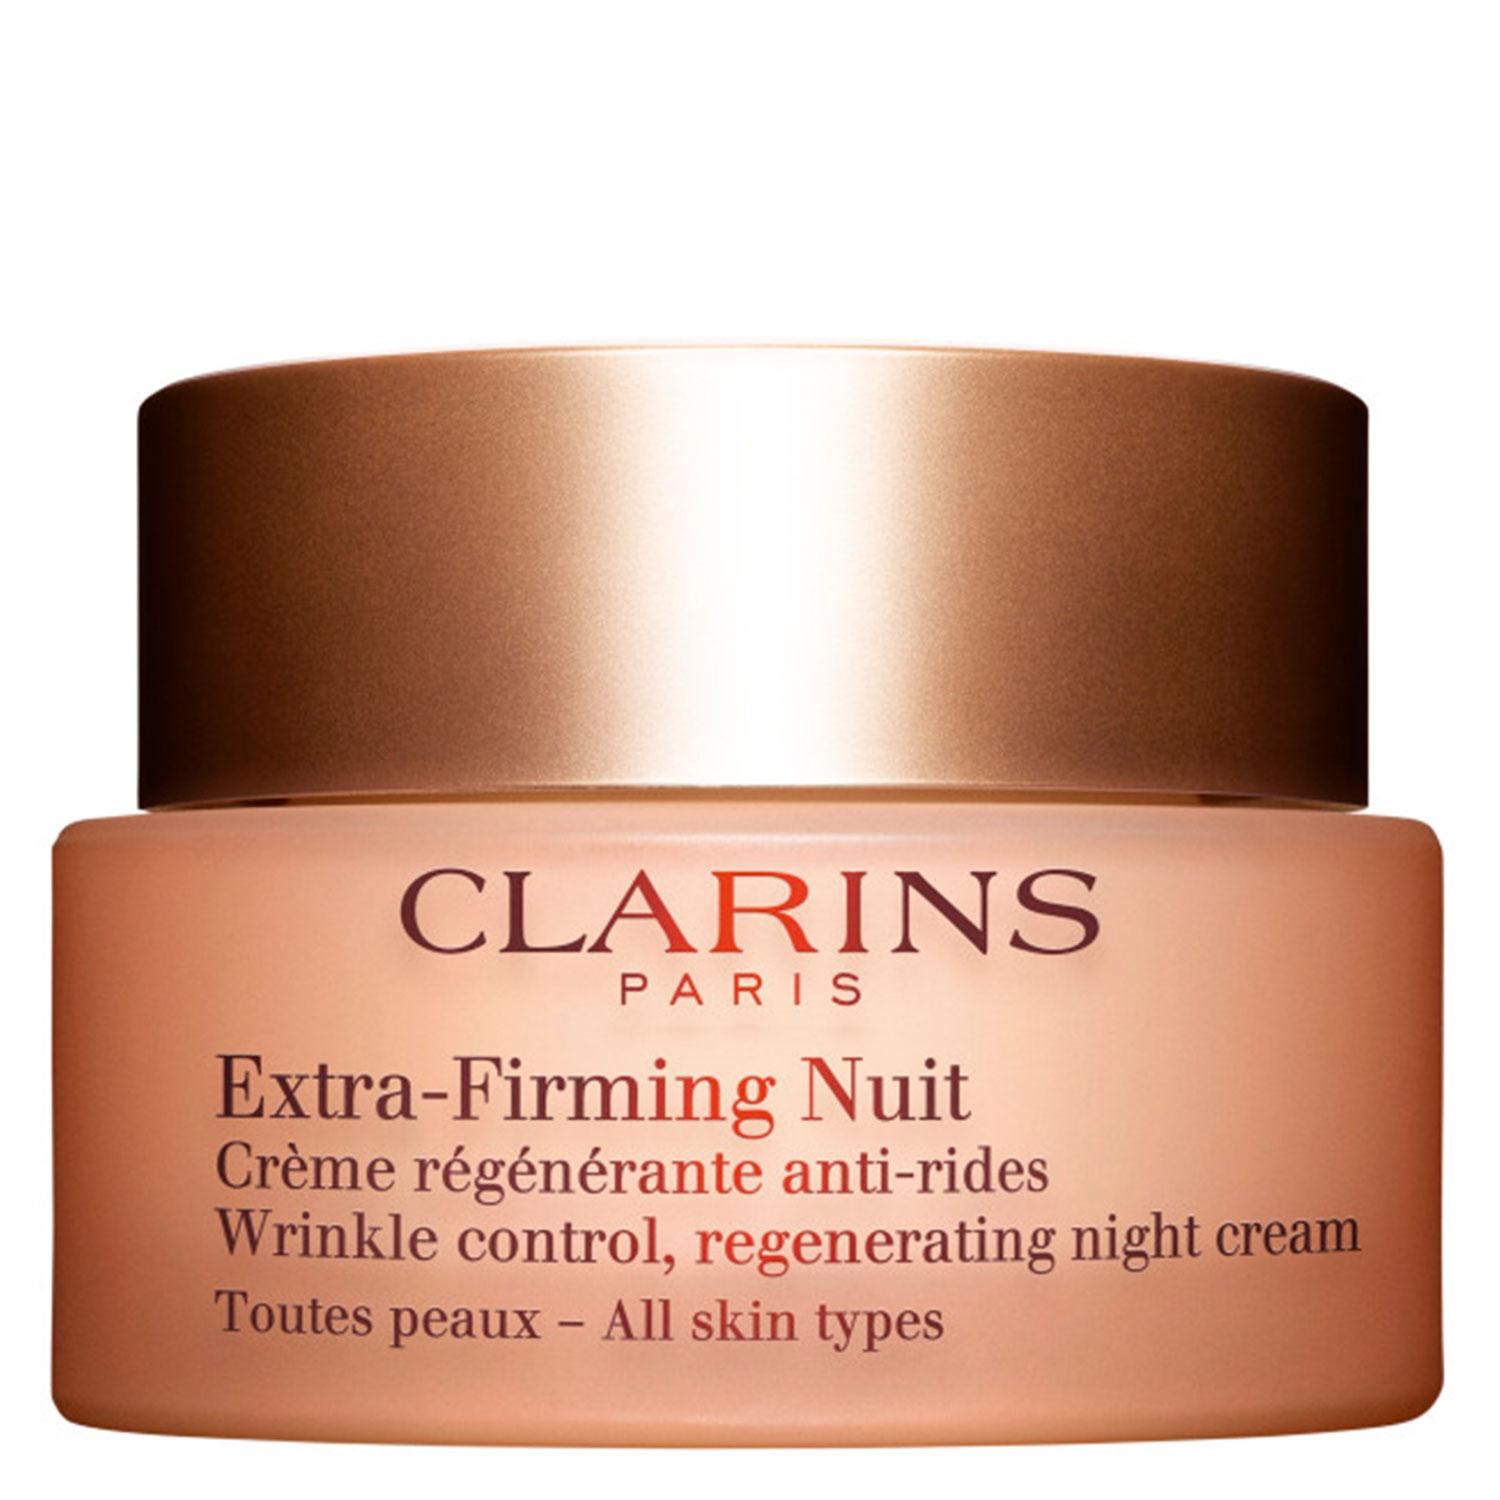 Extra Firming - Regenerating Wrinkle Control Night Cream